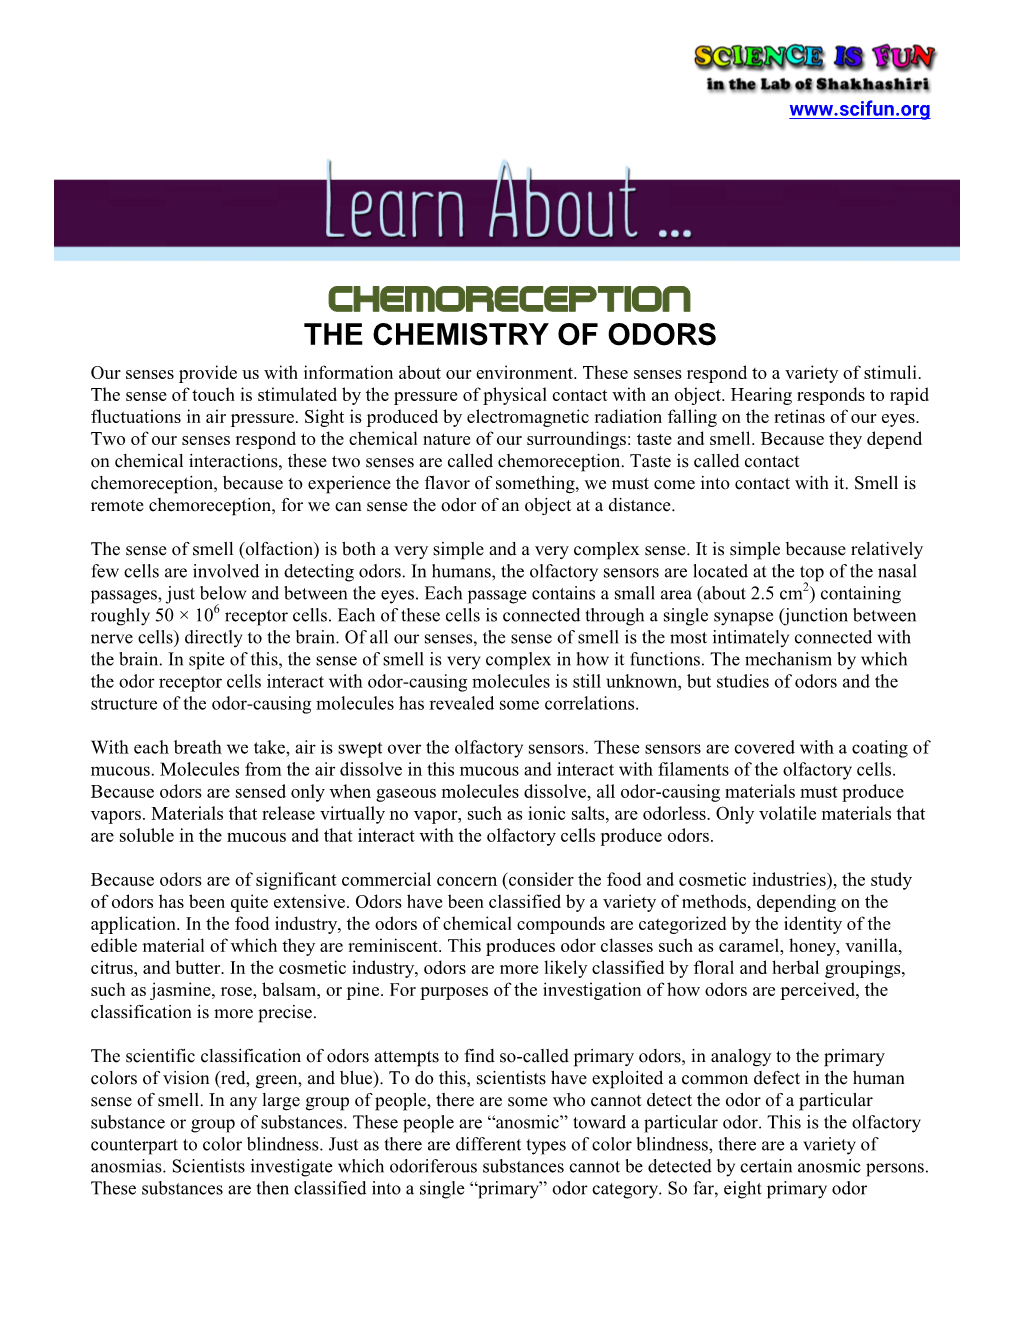 Chemoreception the Chemistry of Odors